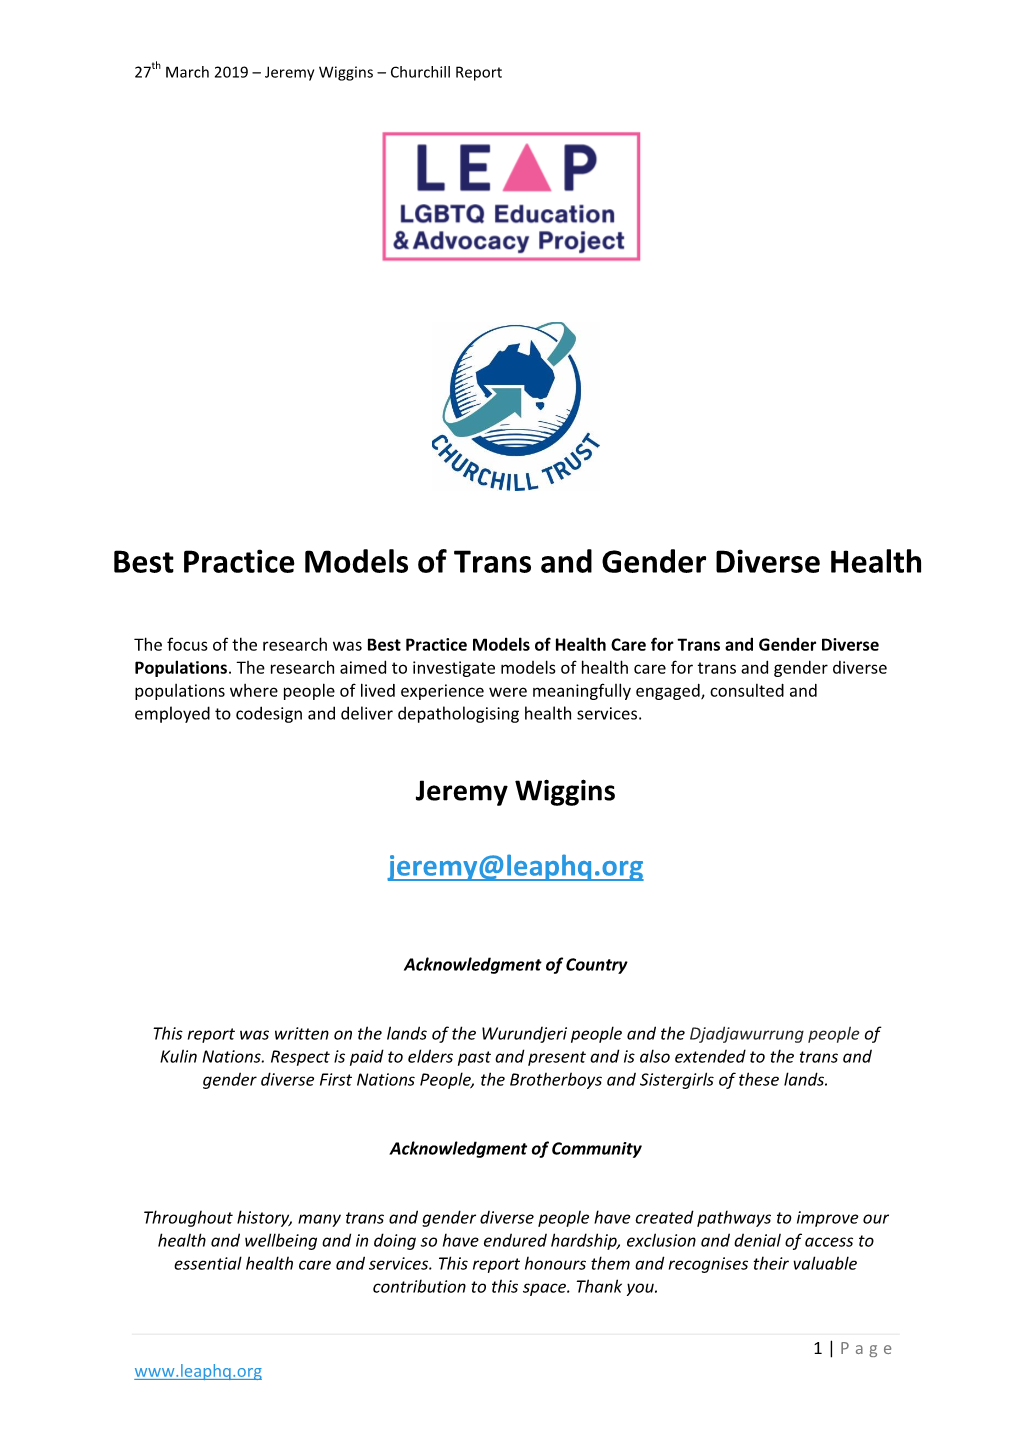 To Investigate Models of Health Service Delivery to Transgender and Gender Diverse Populations